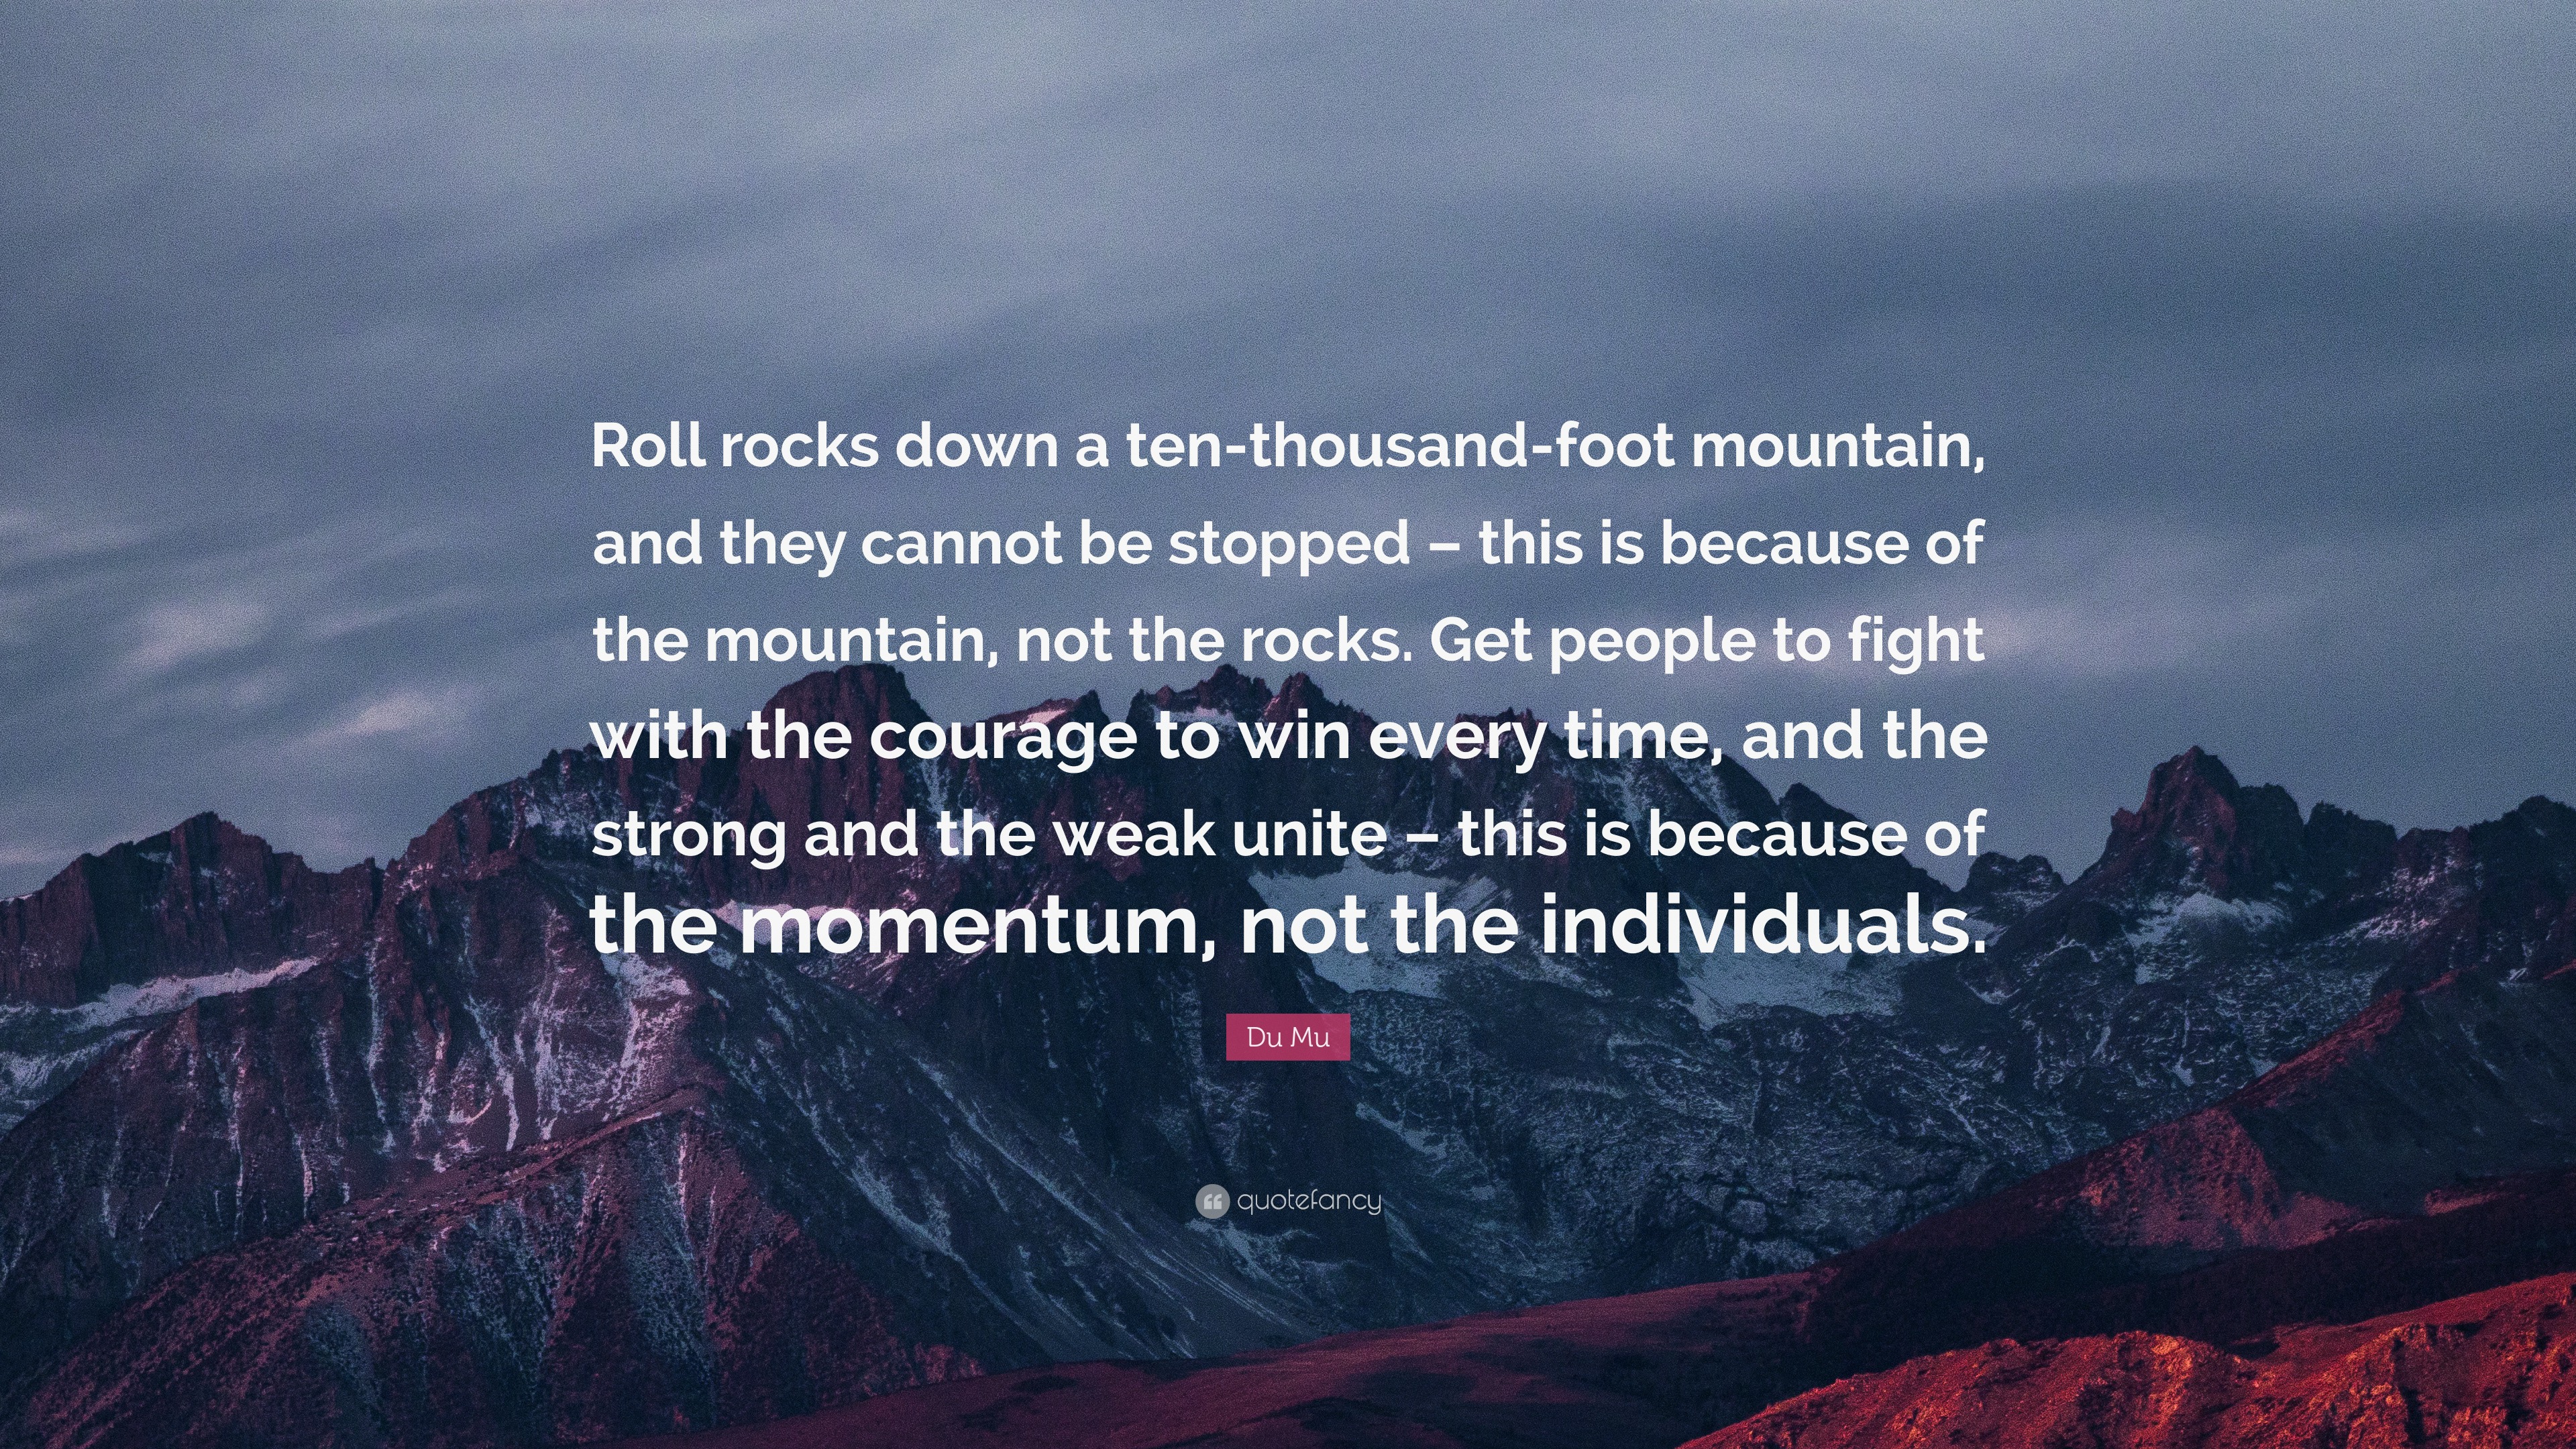 Du Mu Quote: “Roll rocks down a ten-thousand-foot mountain, and